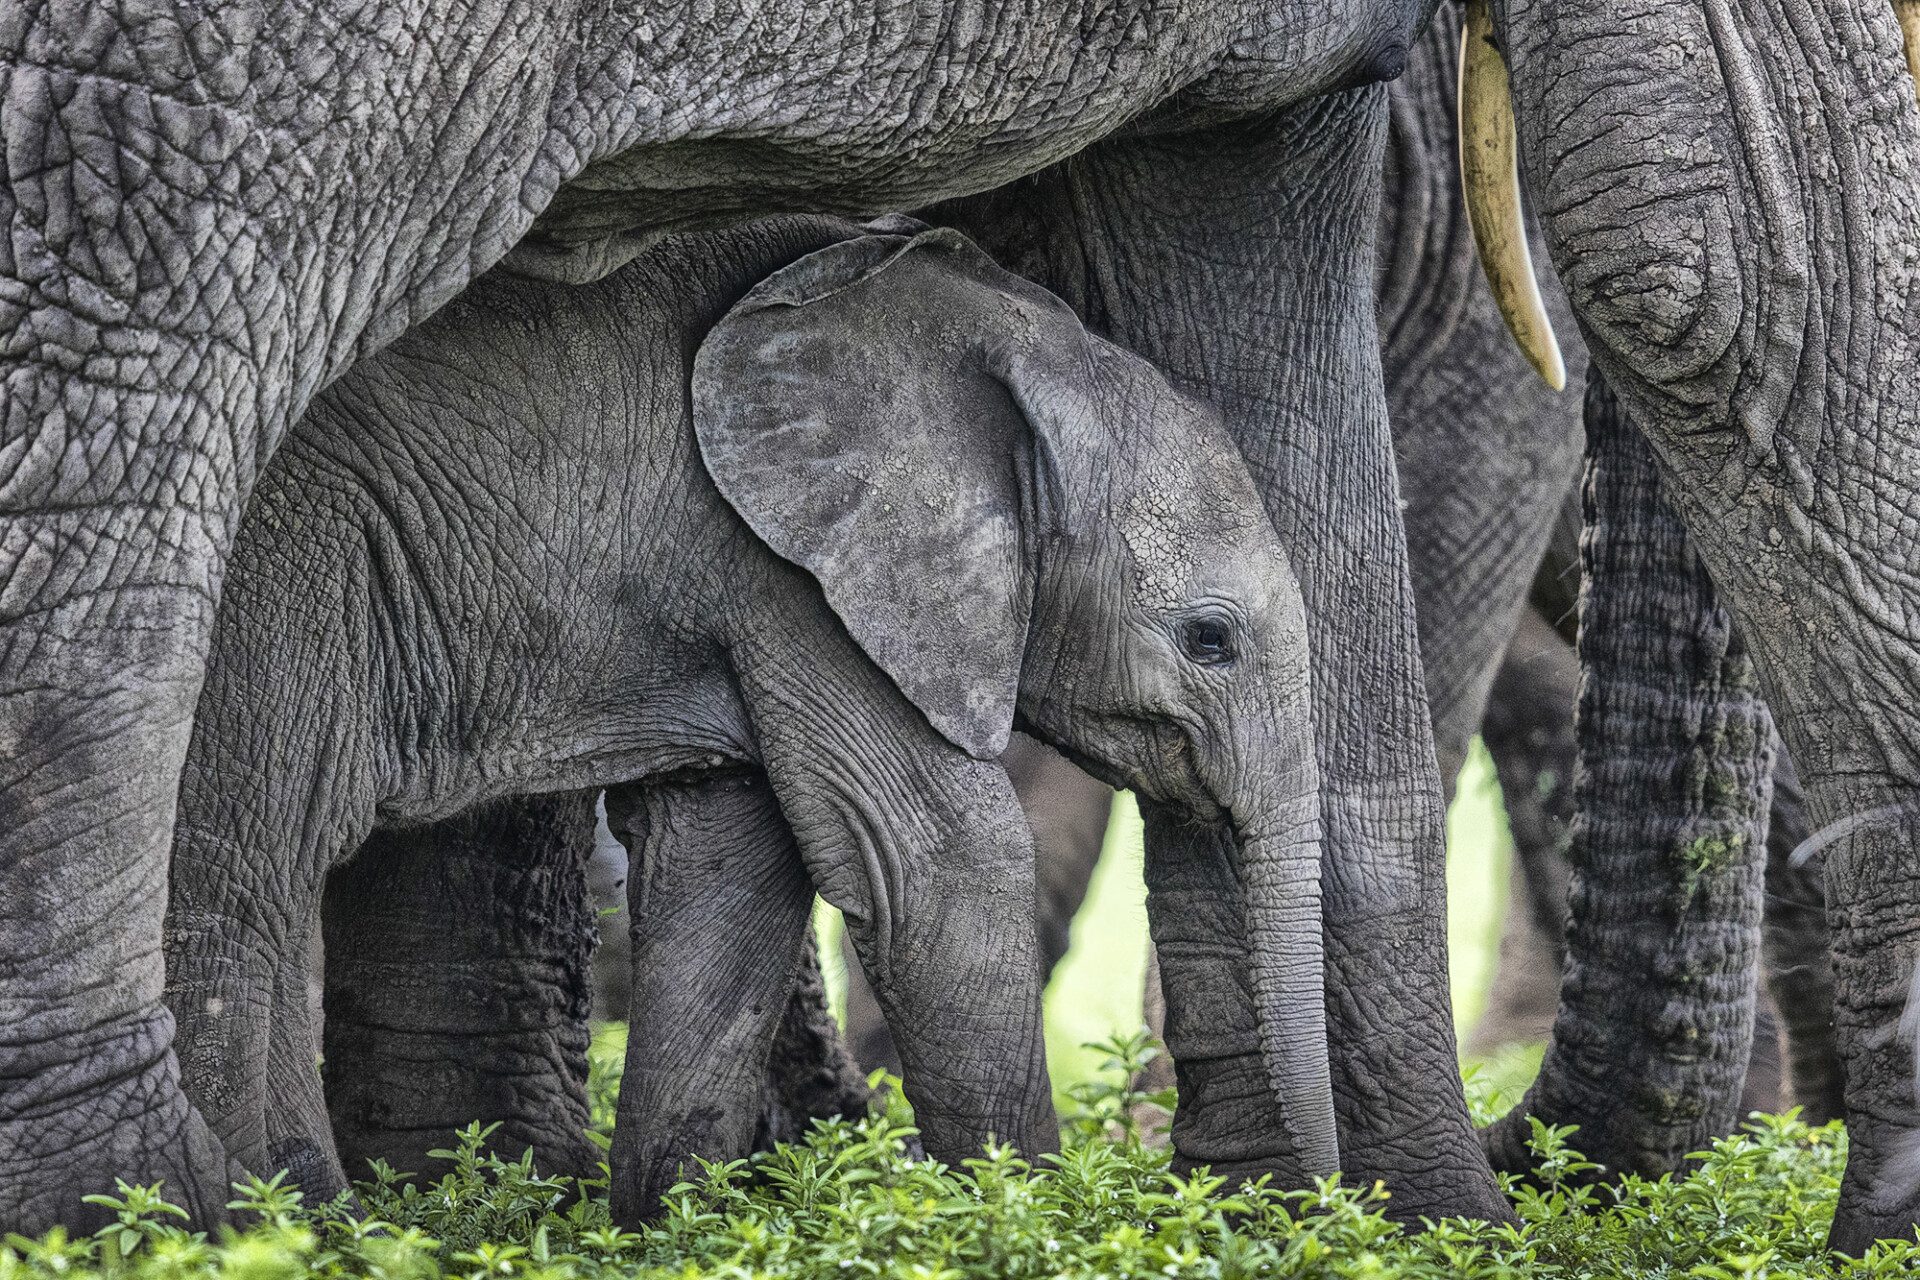 newbig5-Karine-Aigner.-African-Elephant.-Status-Endangered.-Ngorongoro-Conservation-Area-Tanzania-960x640@2x.jpg